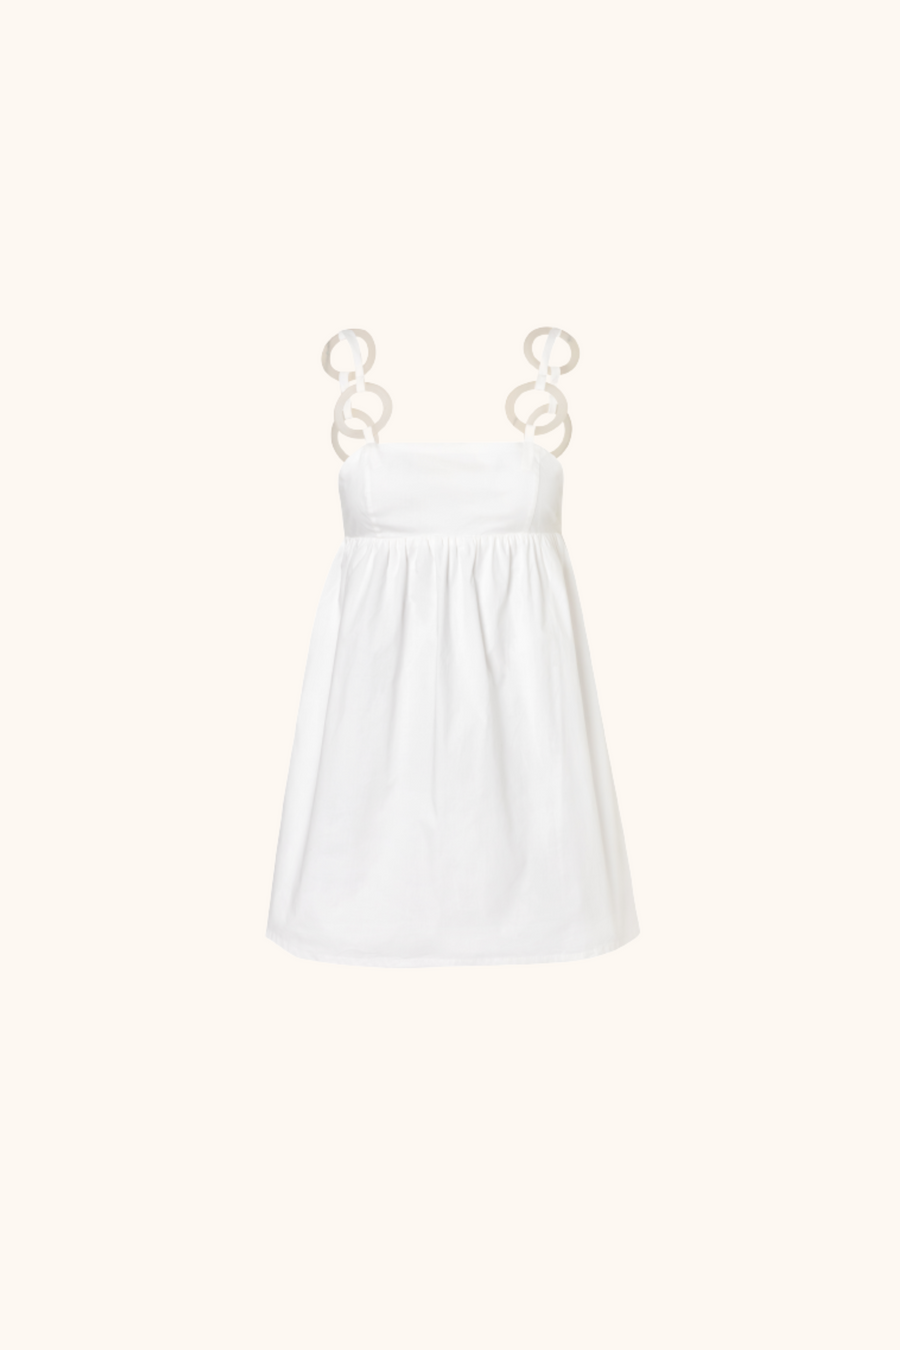 Bahama White Mini Dress